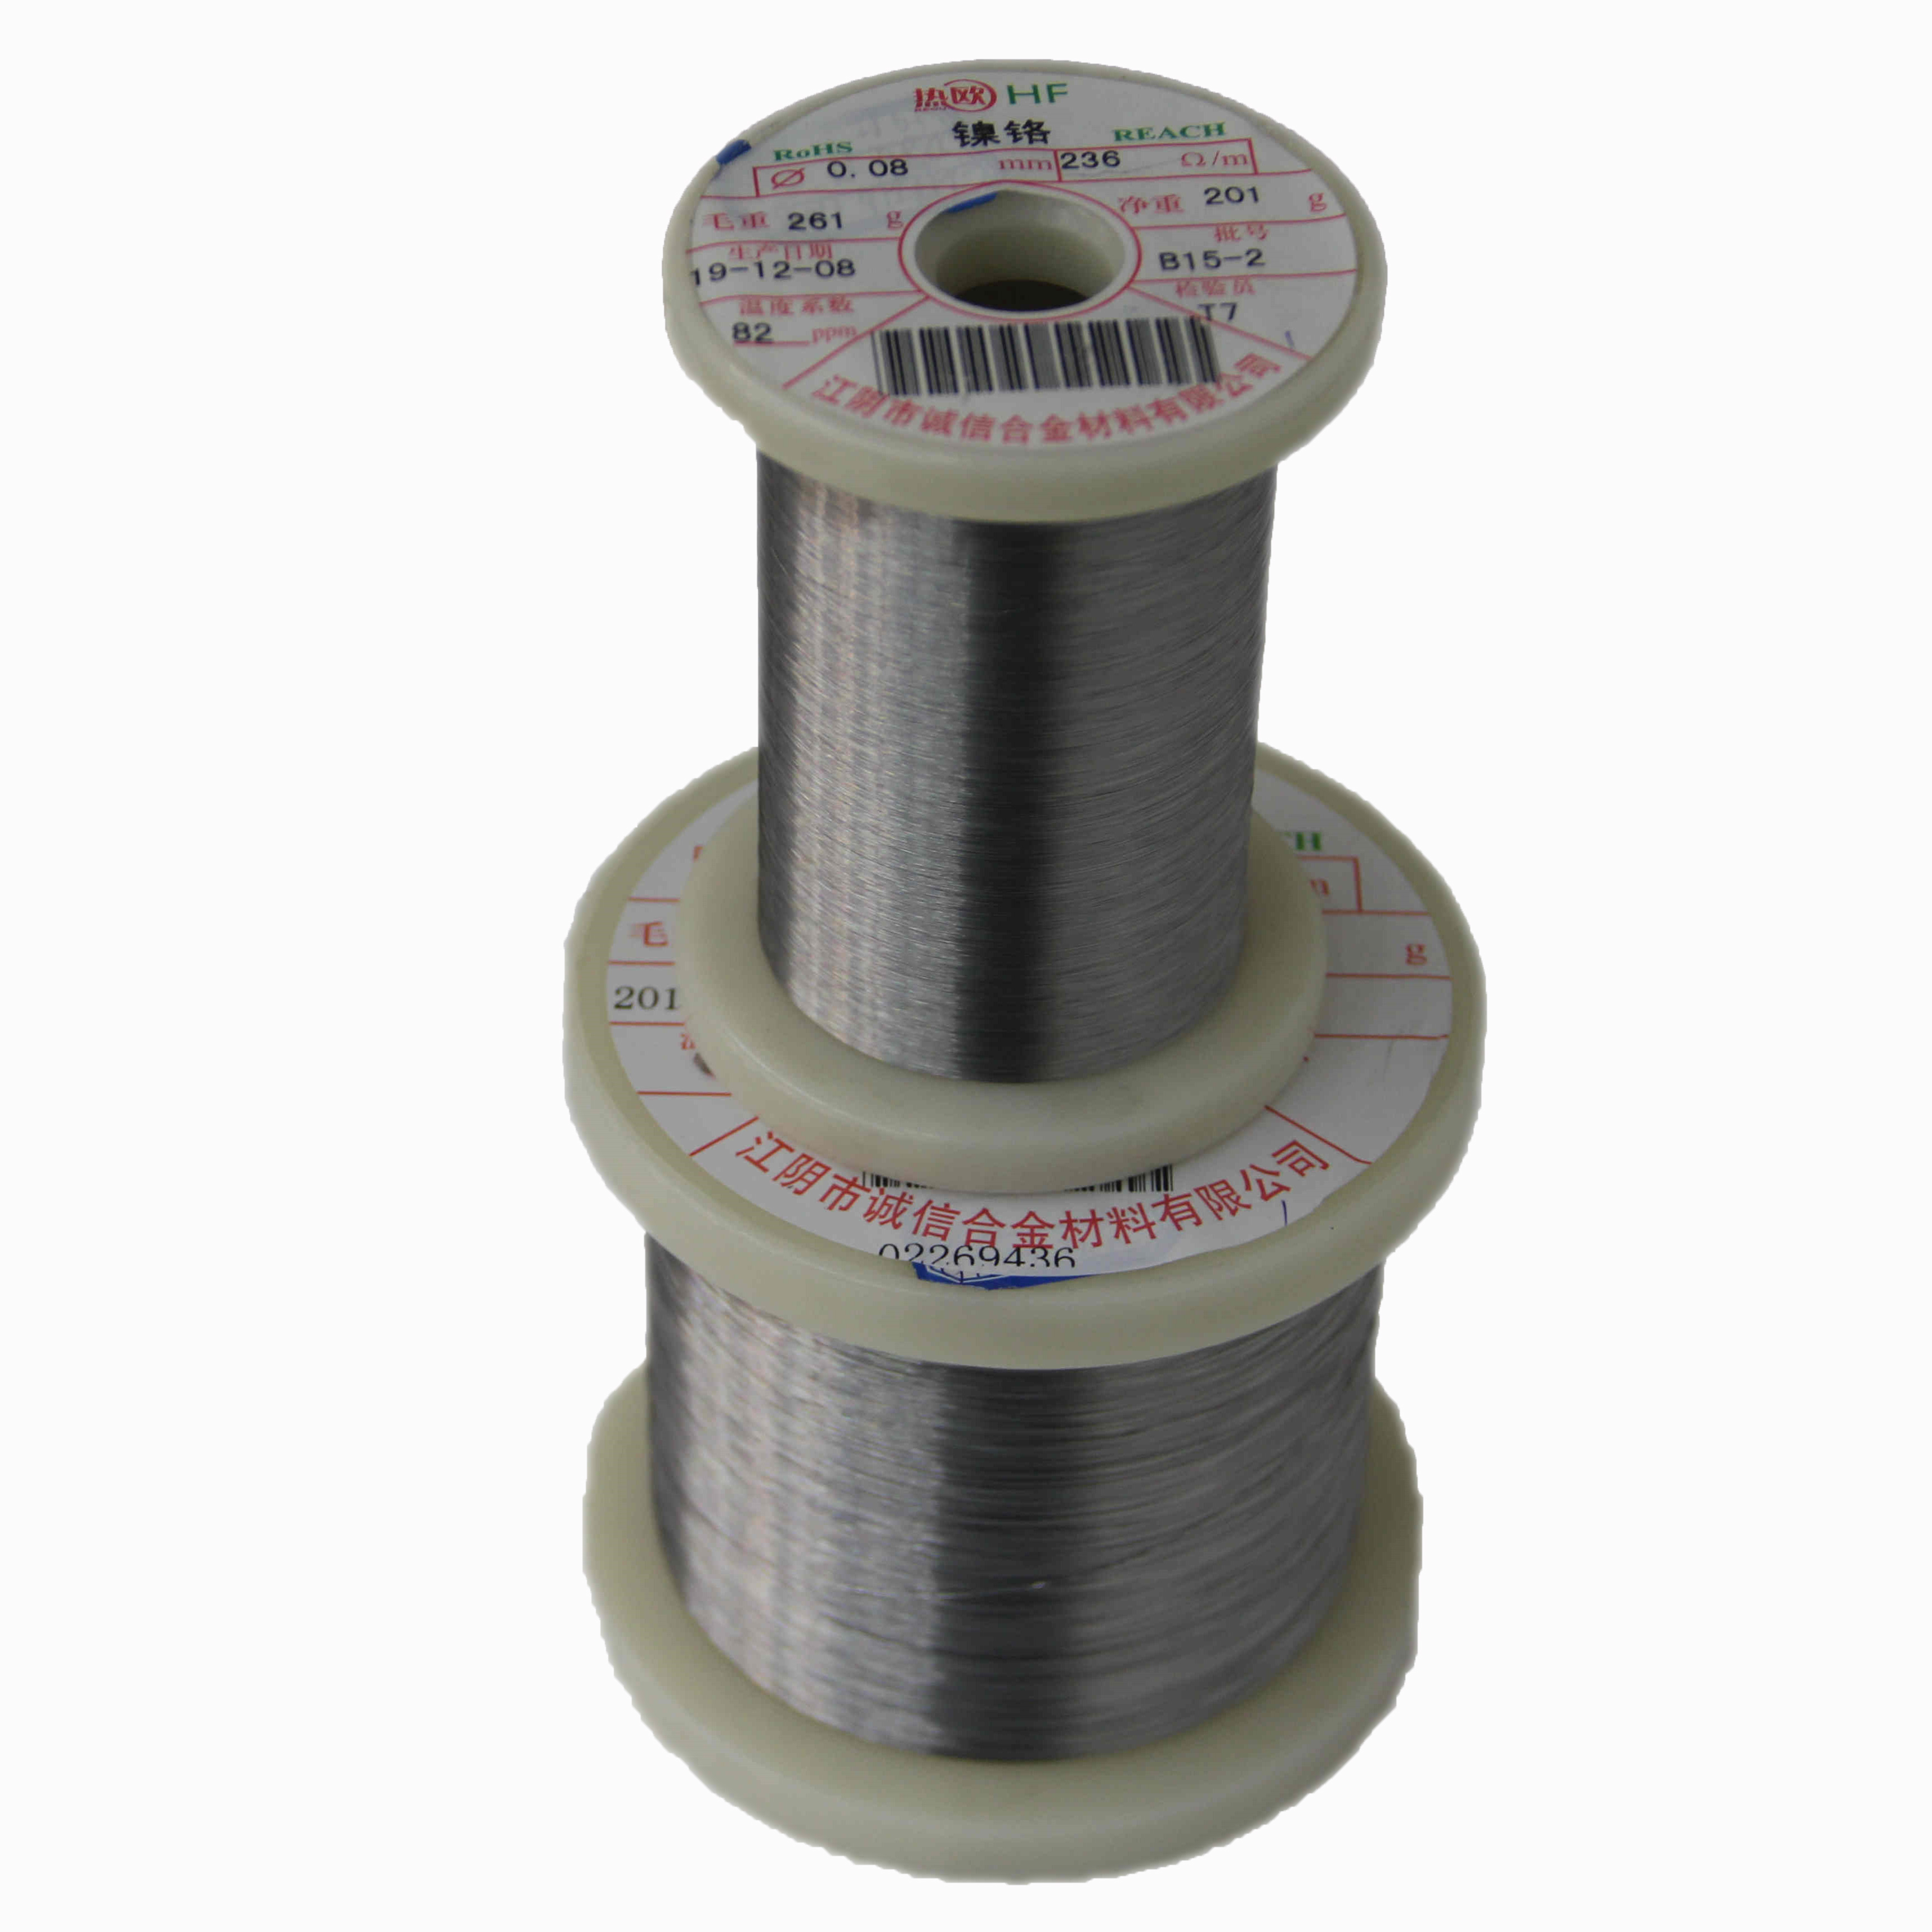 Cr20Ni80 Nickel-Chromium alloy wire